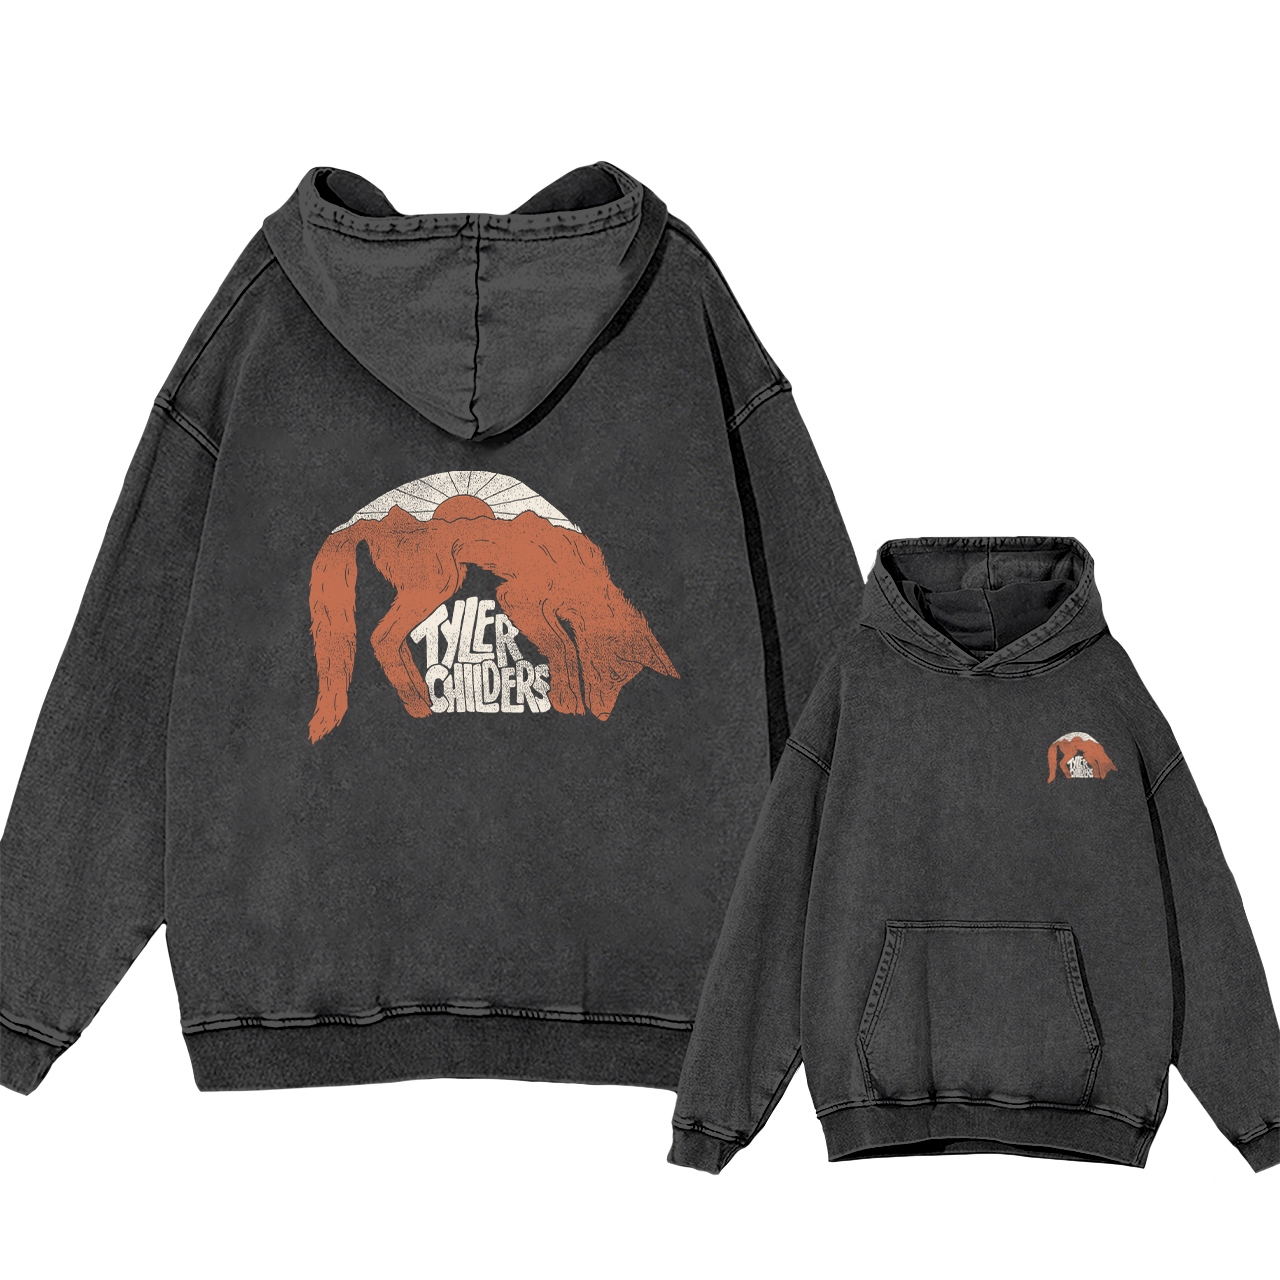 Tyler Childers Sunset and Wolf Garment-Dye Hoodies